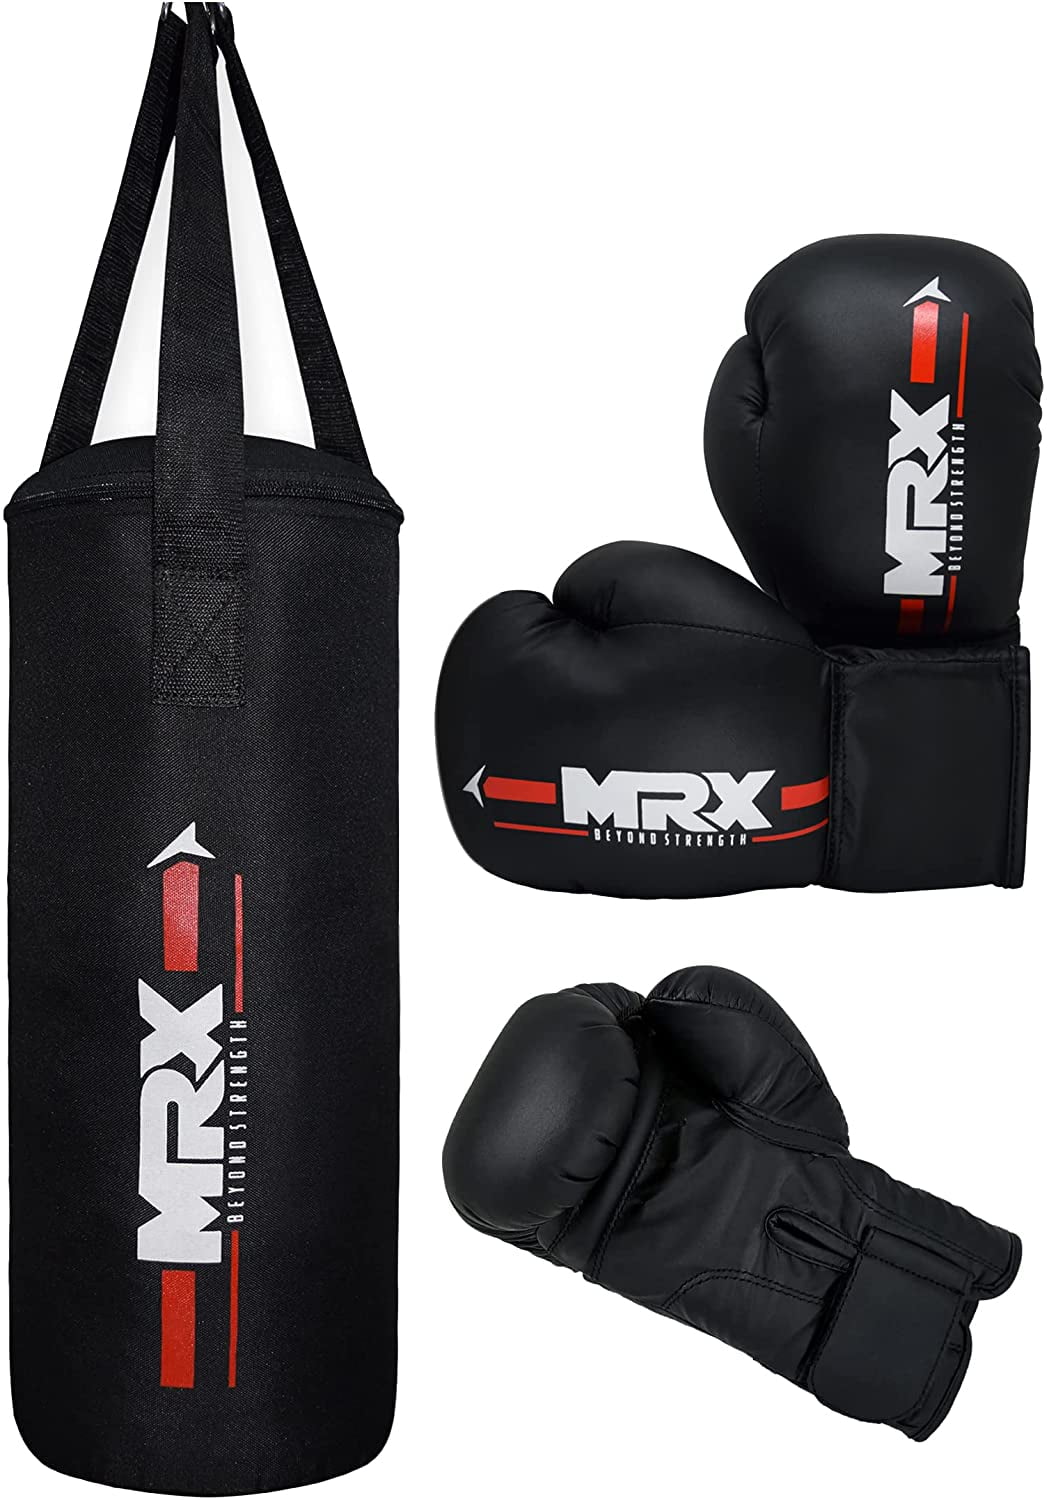 Boxing Training kit Punching Bag Gloves MMA Taekwondo Karate Home GIFT Boys Teen 